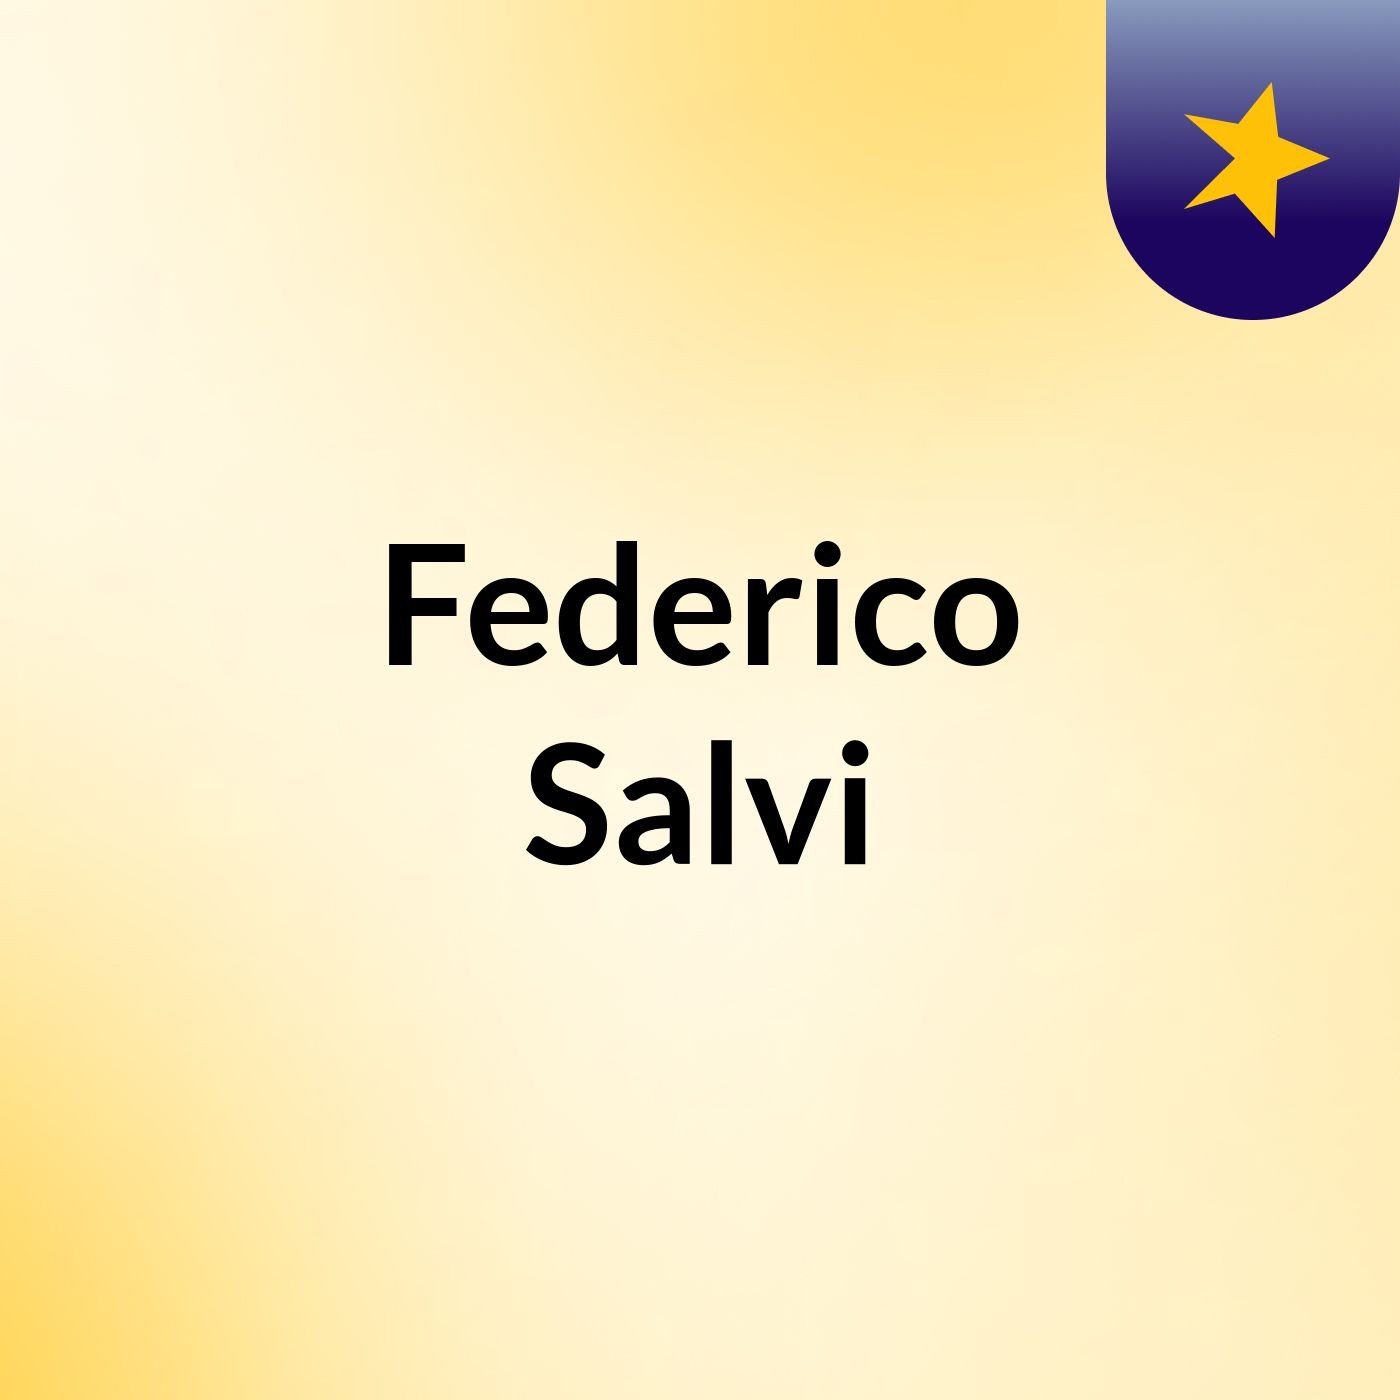 Federico Salvi